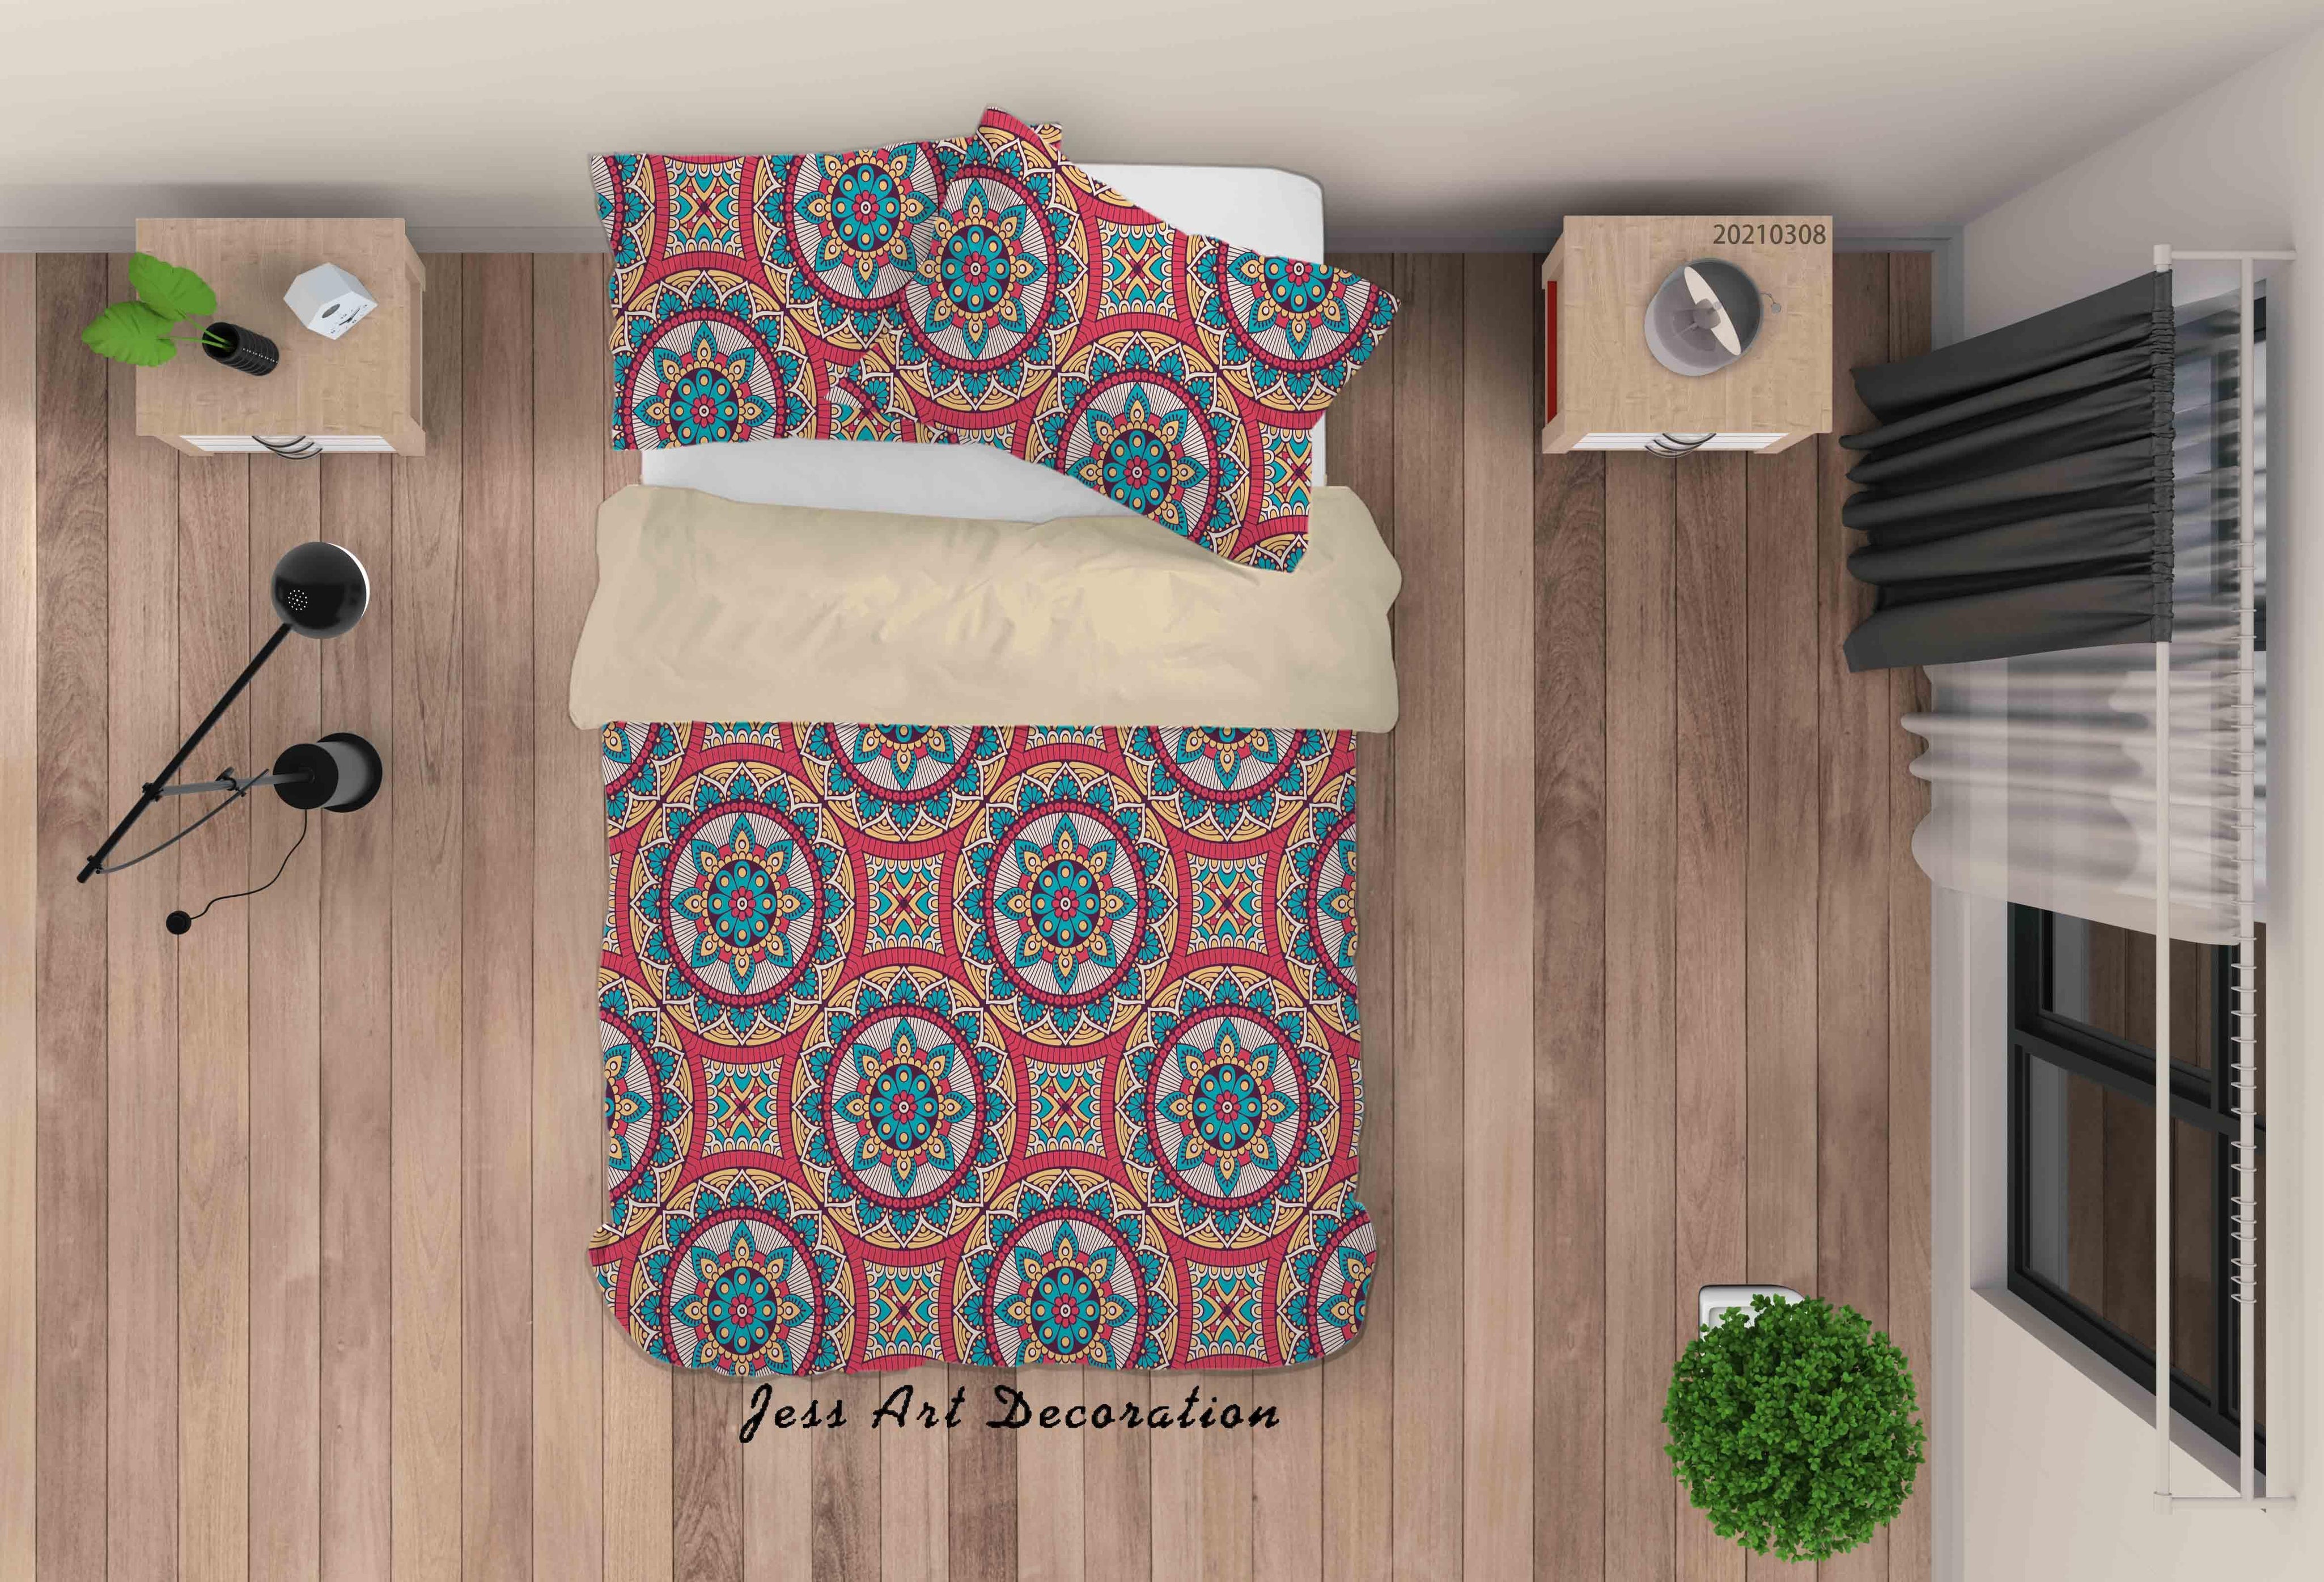 3D Abstract Blue Geometric Floral Quilt Cover Set Bedding Set Duvet Cover Pillowcases 28- Jess Art Decoration